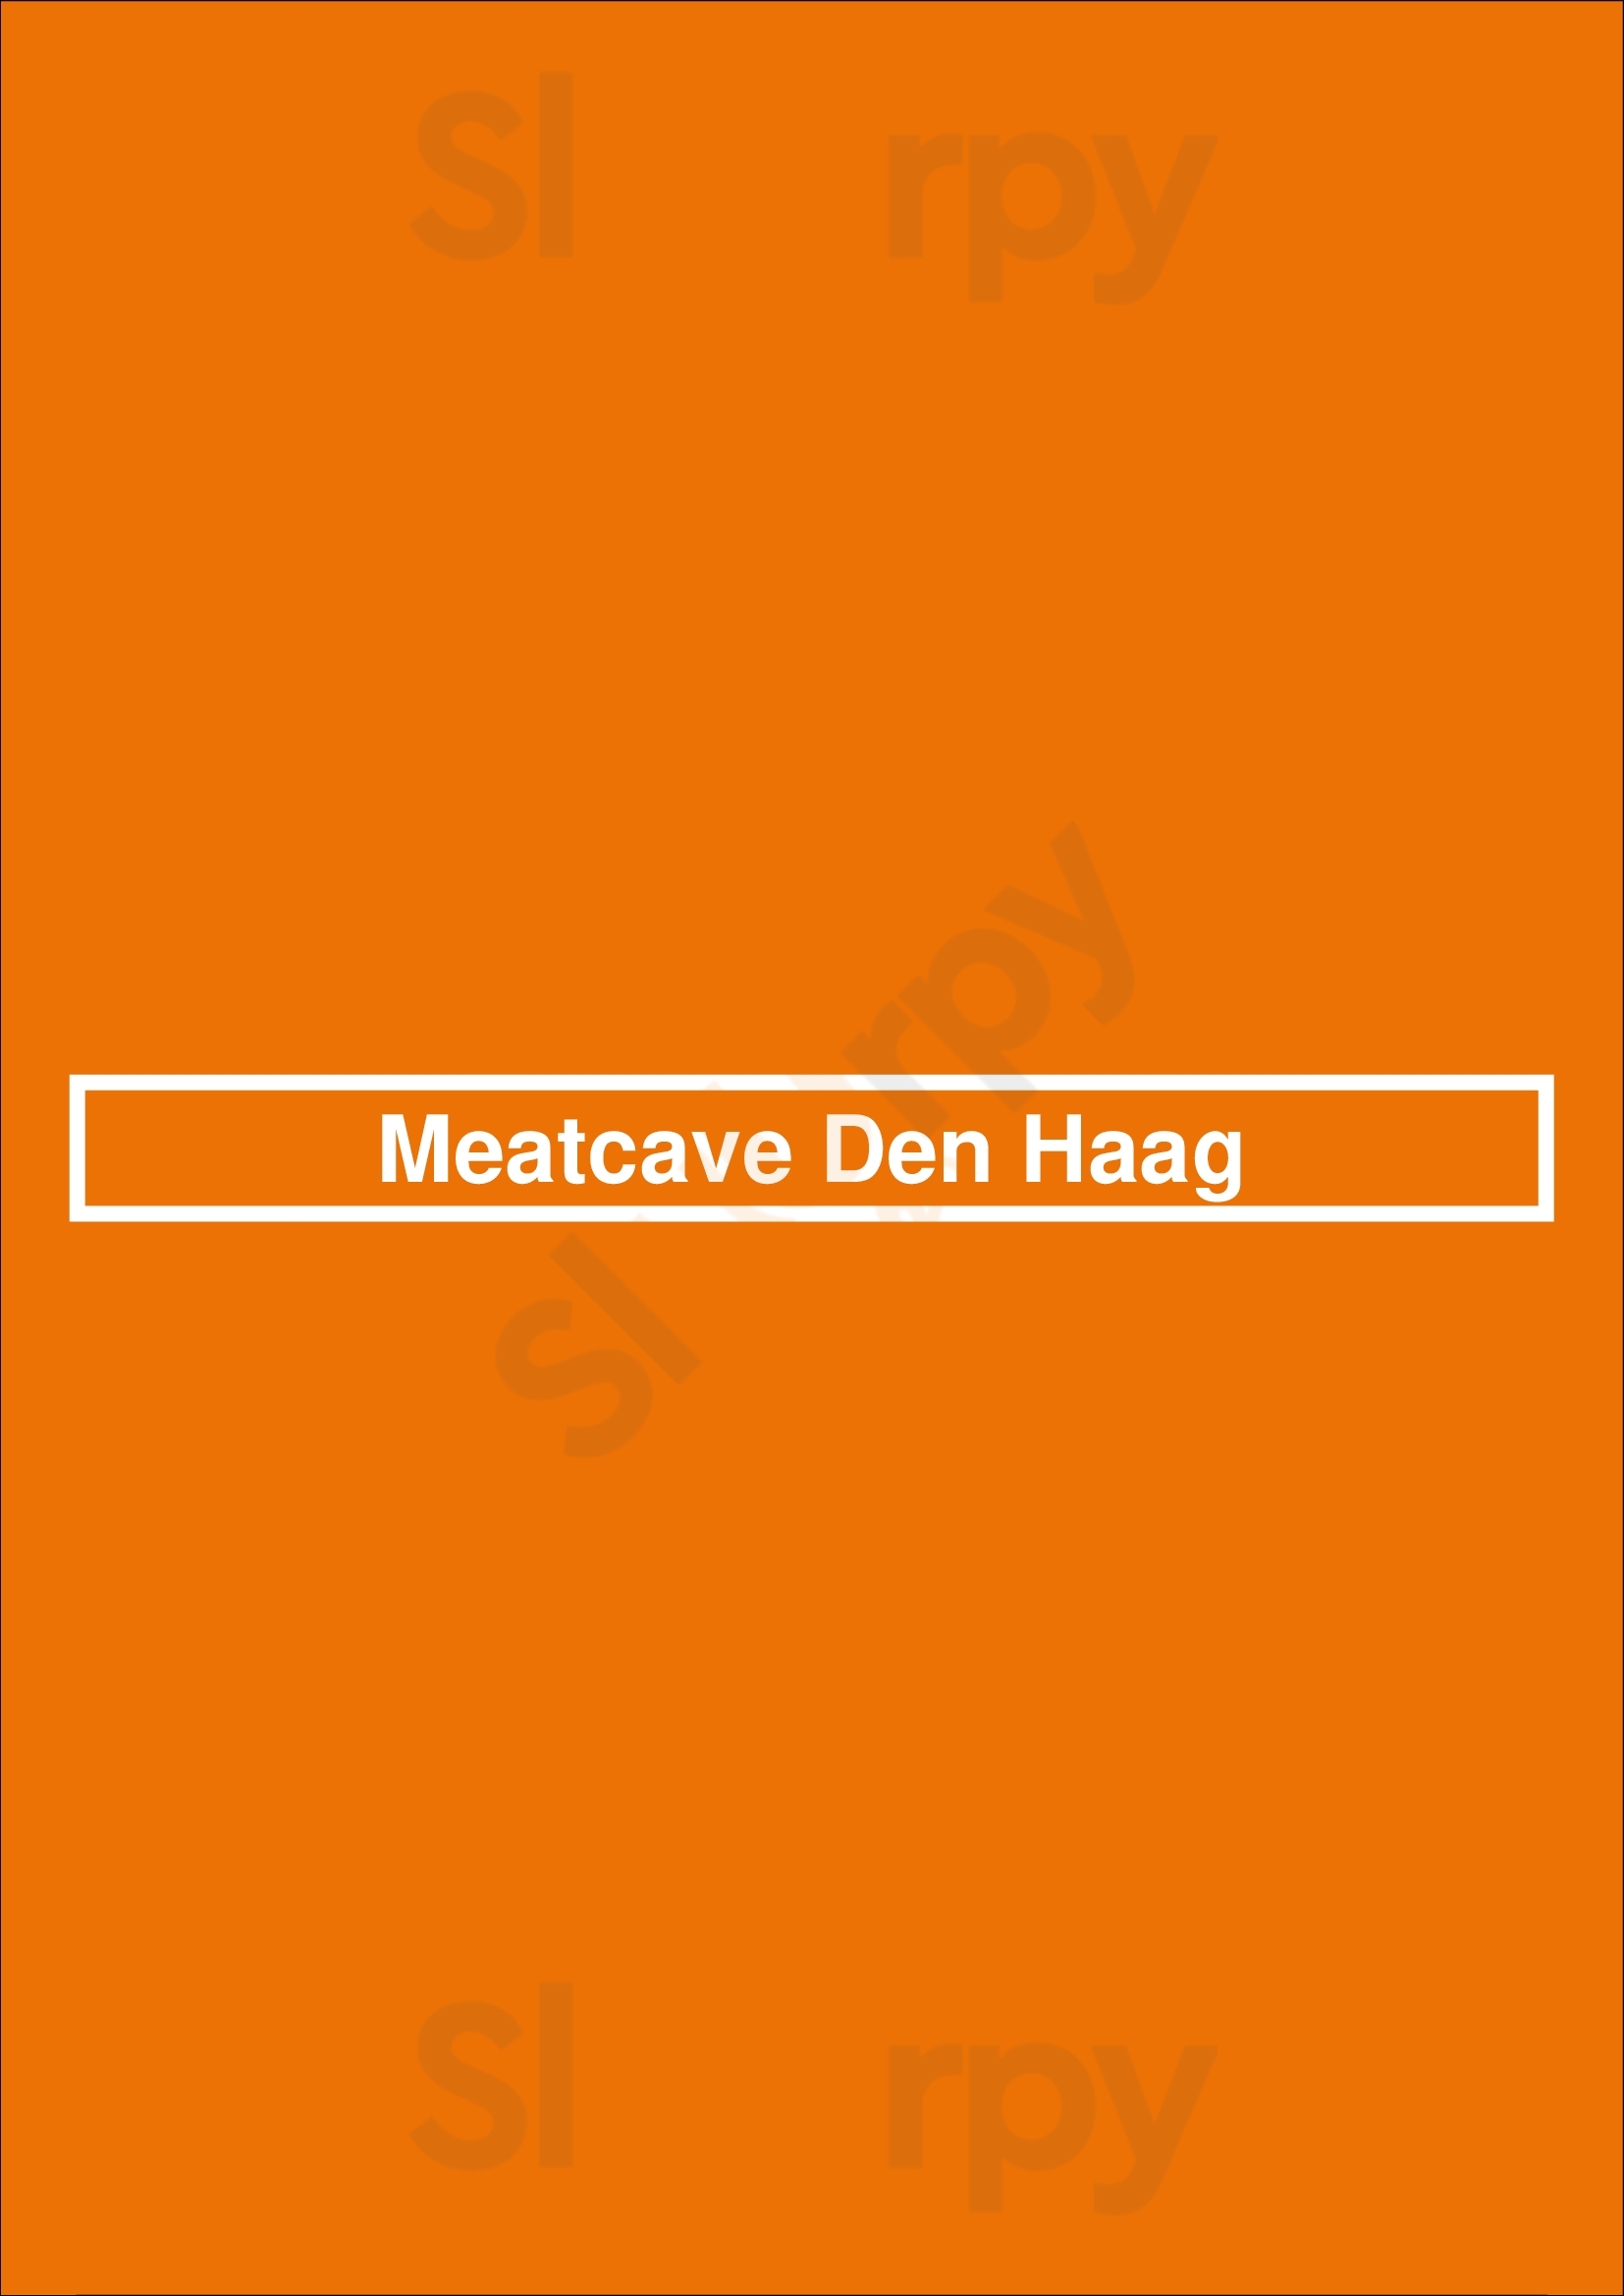 Meatcave Den Haag Den Haag Menu - 1